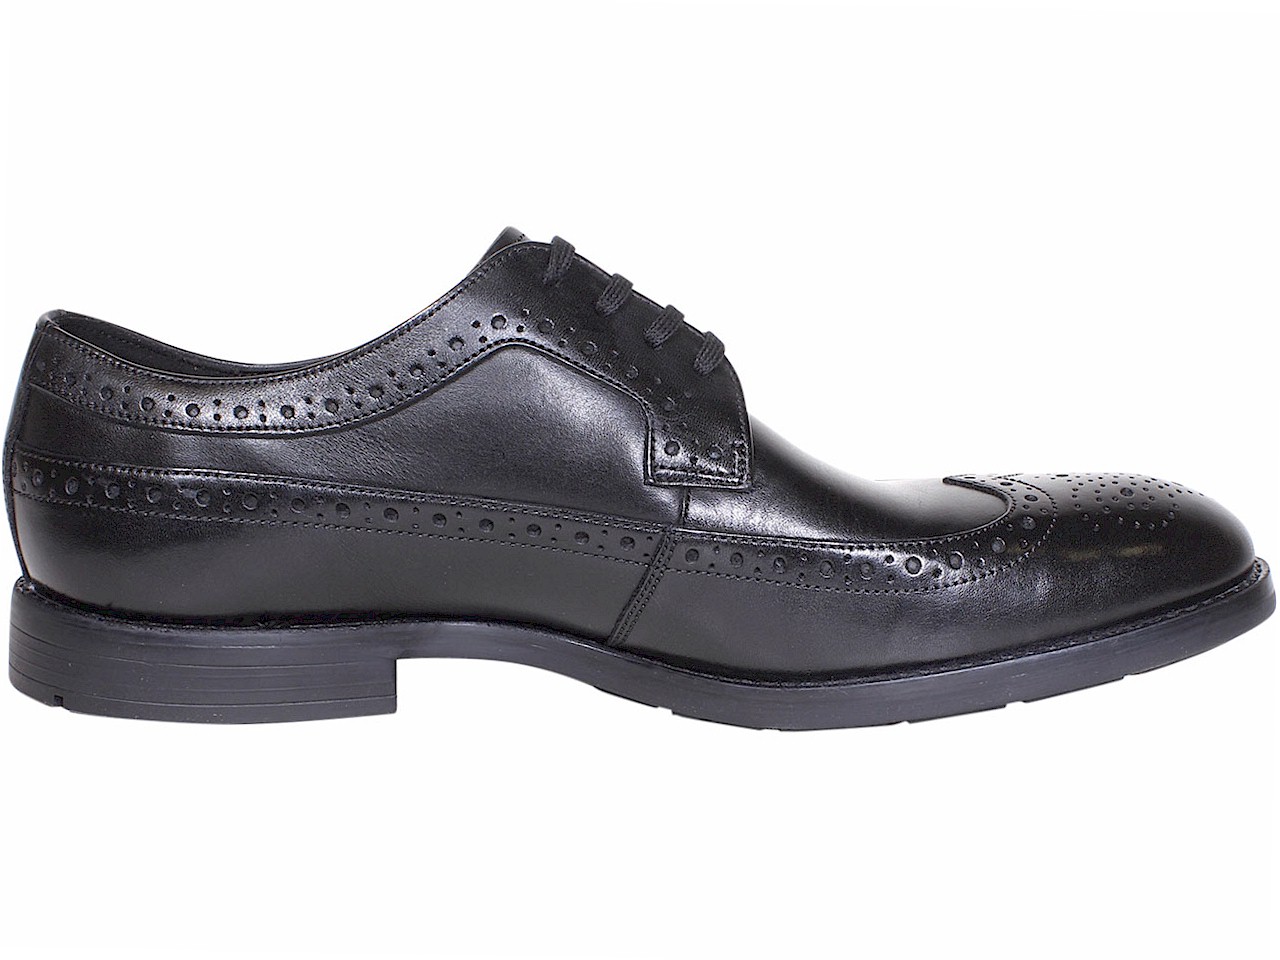 Clarks Craftmaster Ronnie Limit Oxfords Men's Wingtips Shoes | JoyLot.com